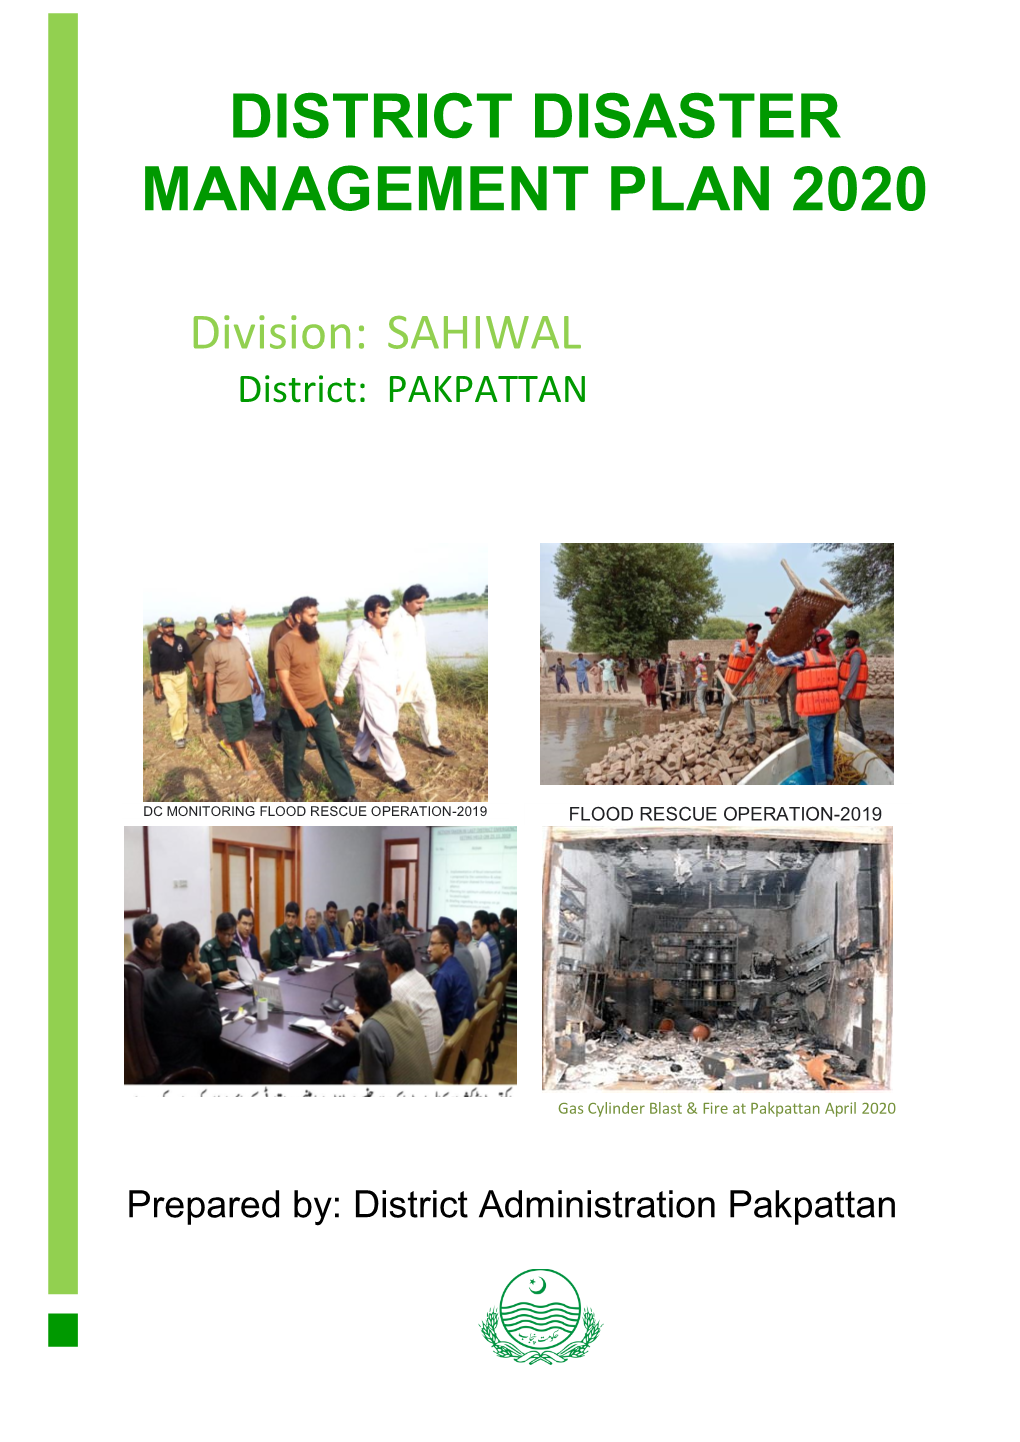 SAHIWAL District: PAKPATTAN